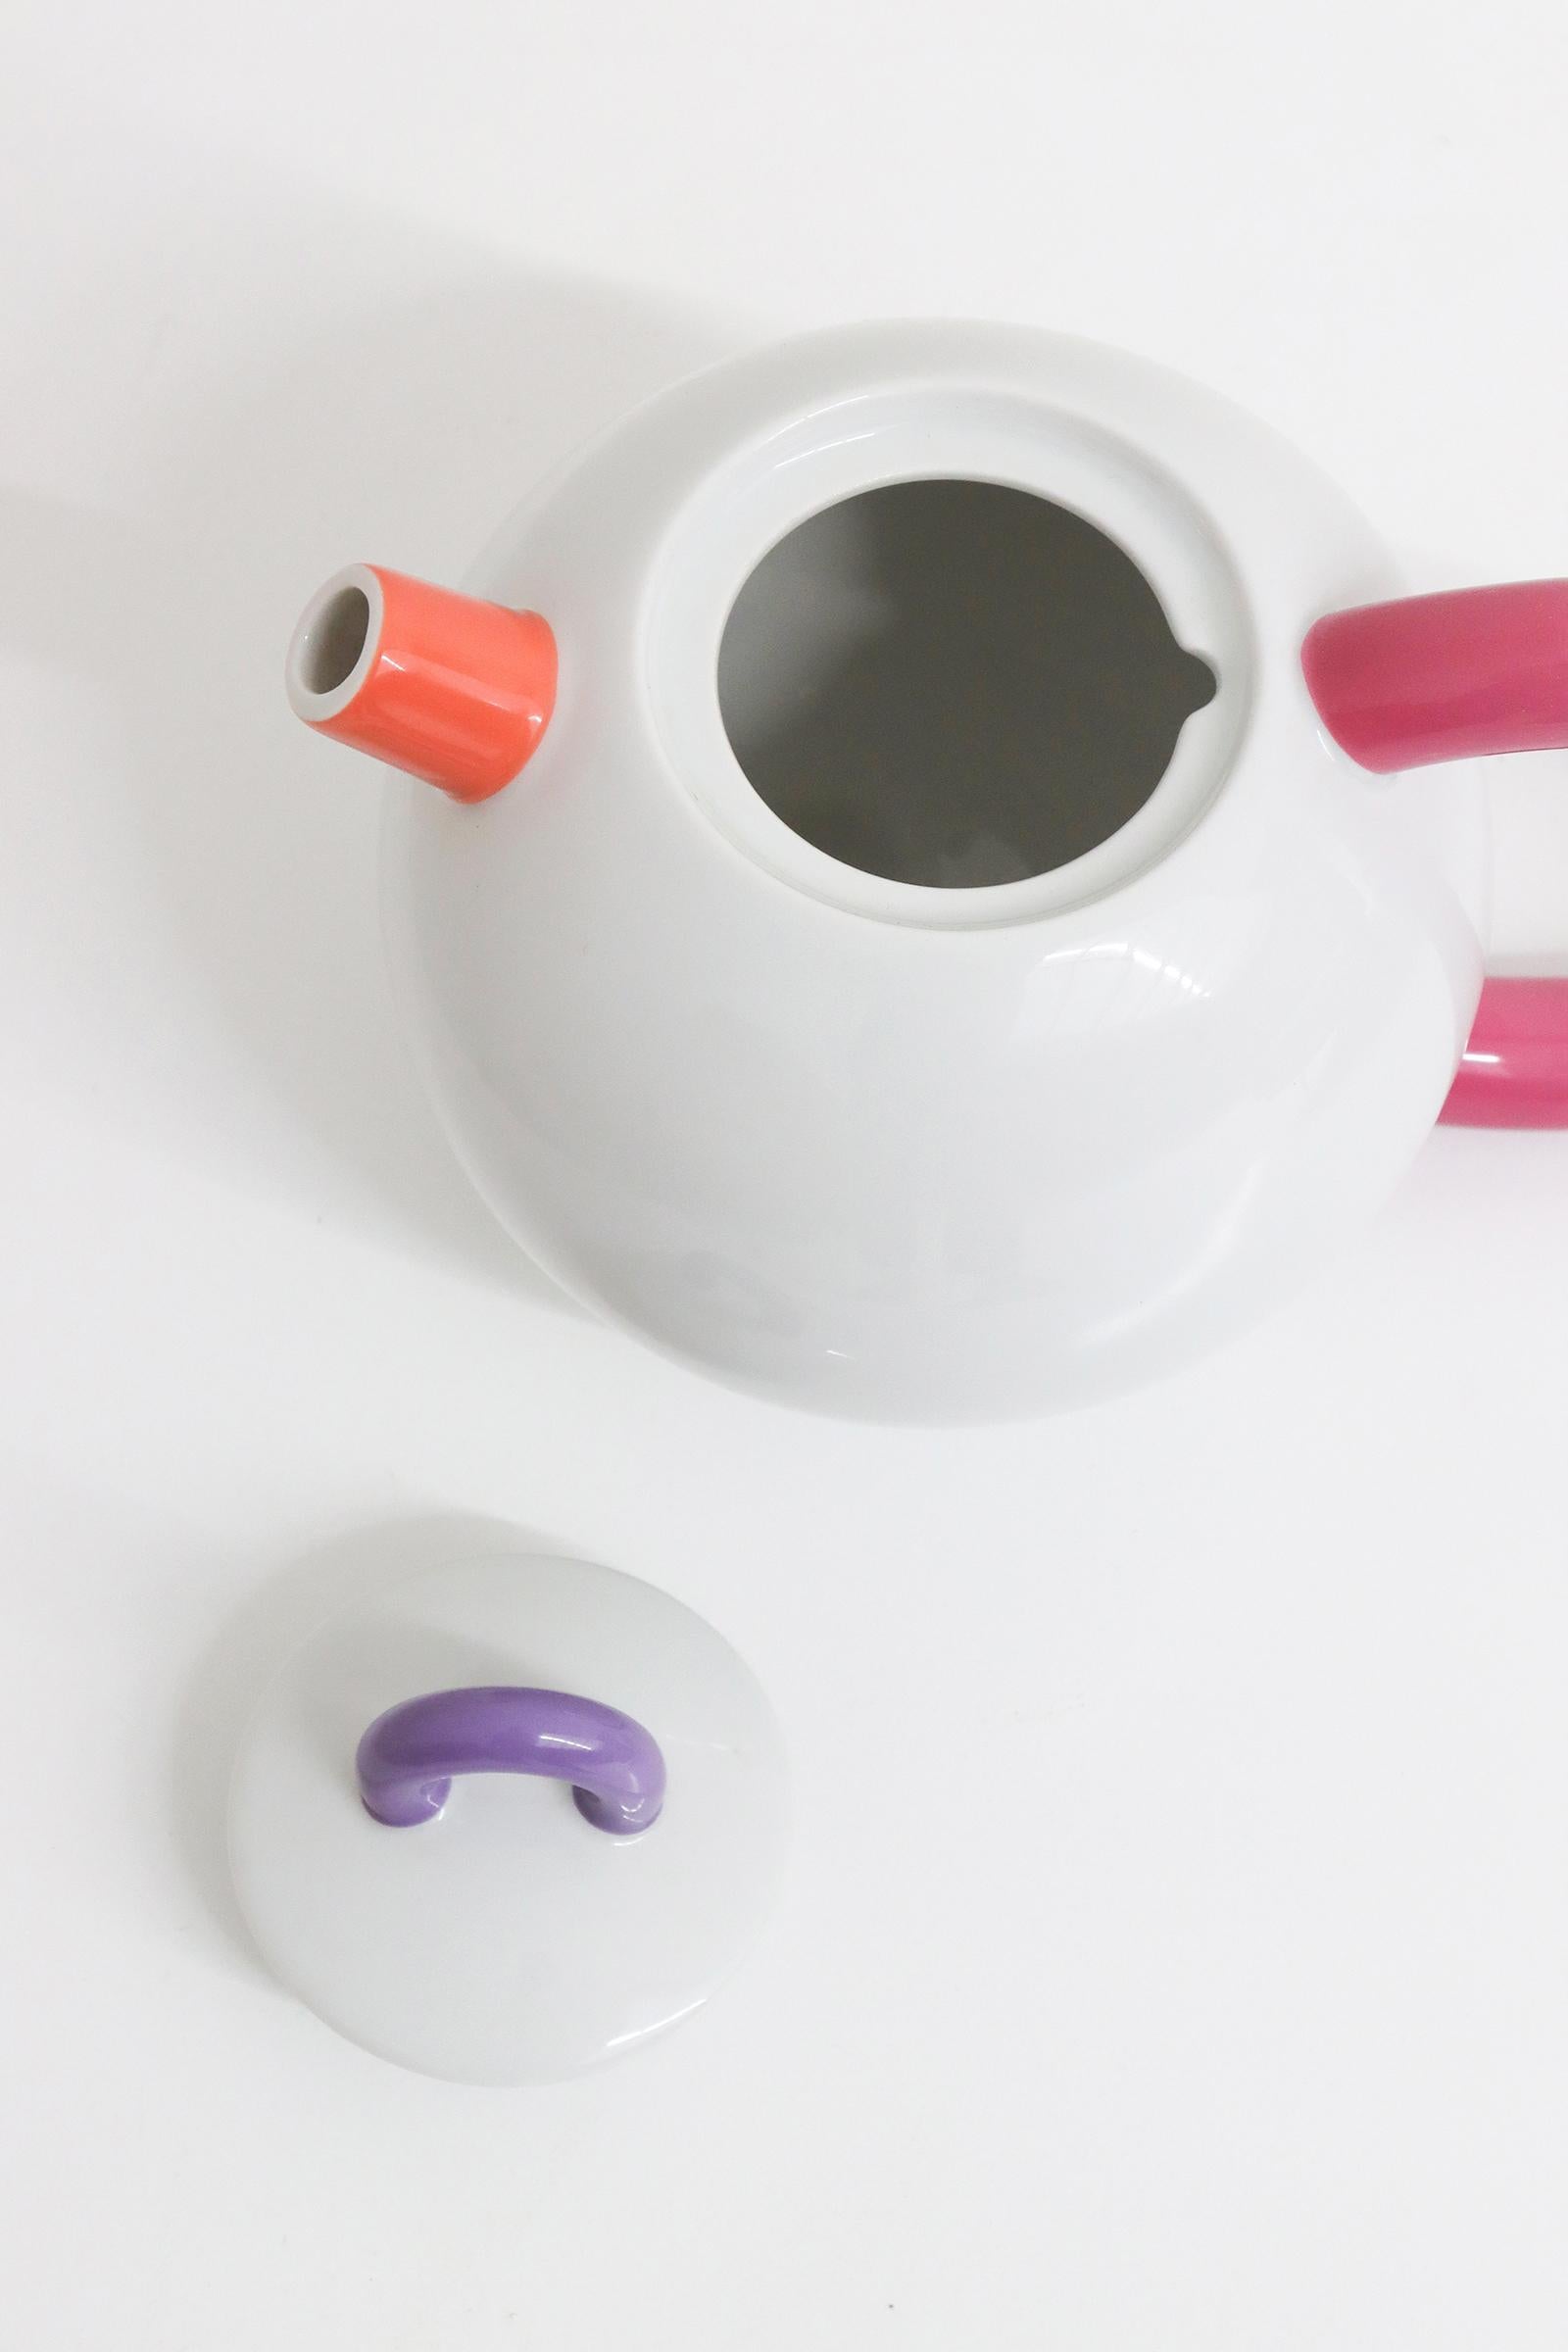 Ceramic Matteo Thun Teapot and Milkjug